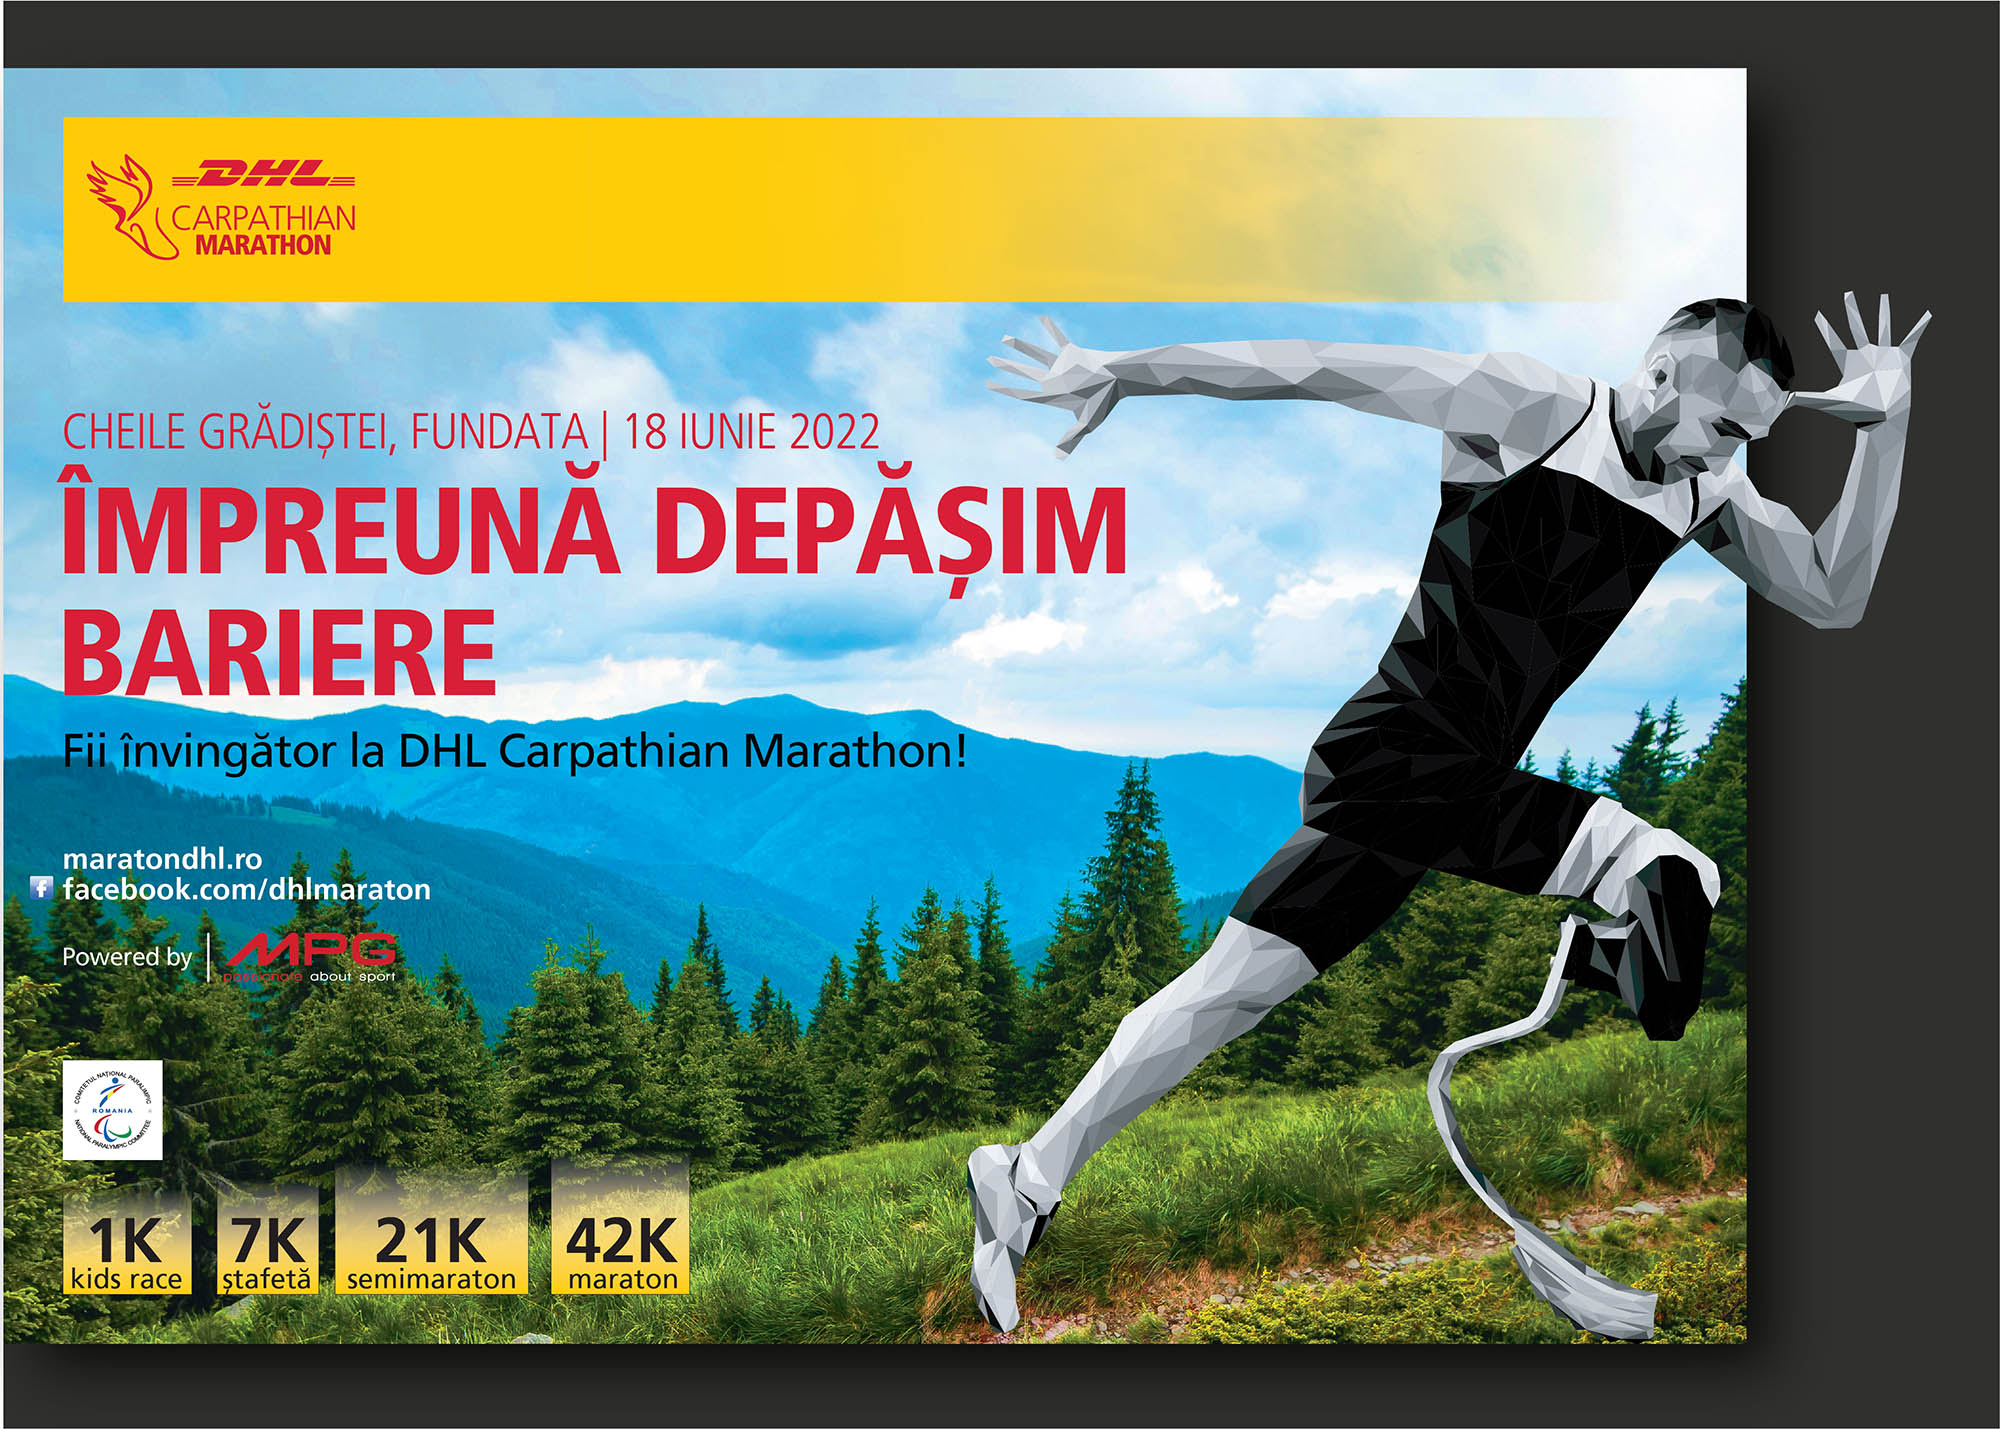 DHL Carpathian Marathon, în iunie